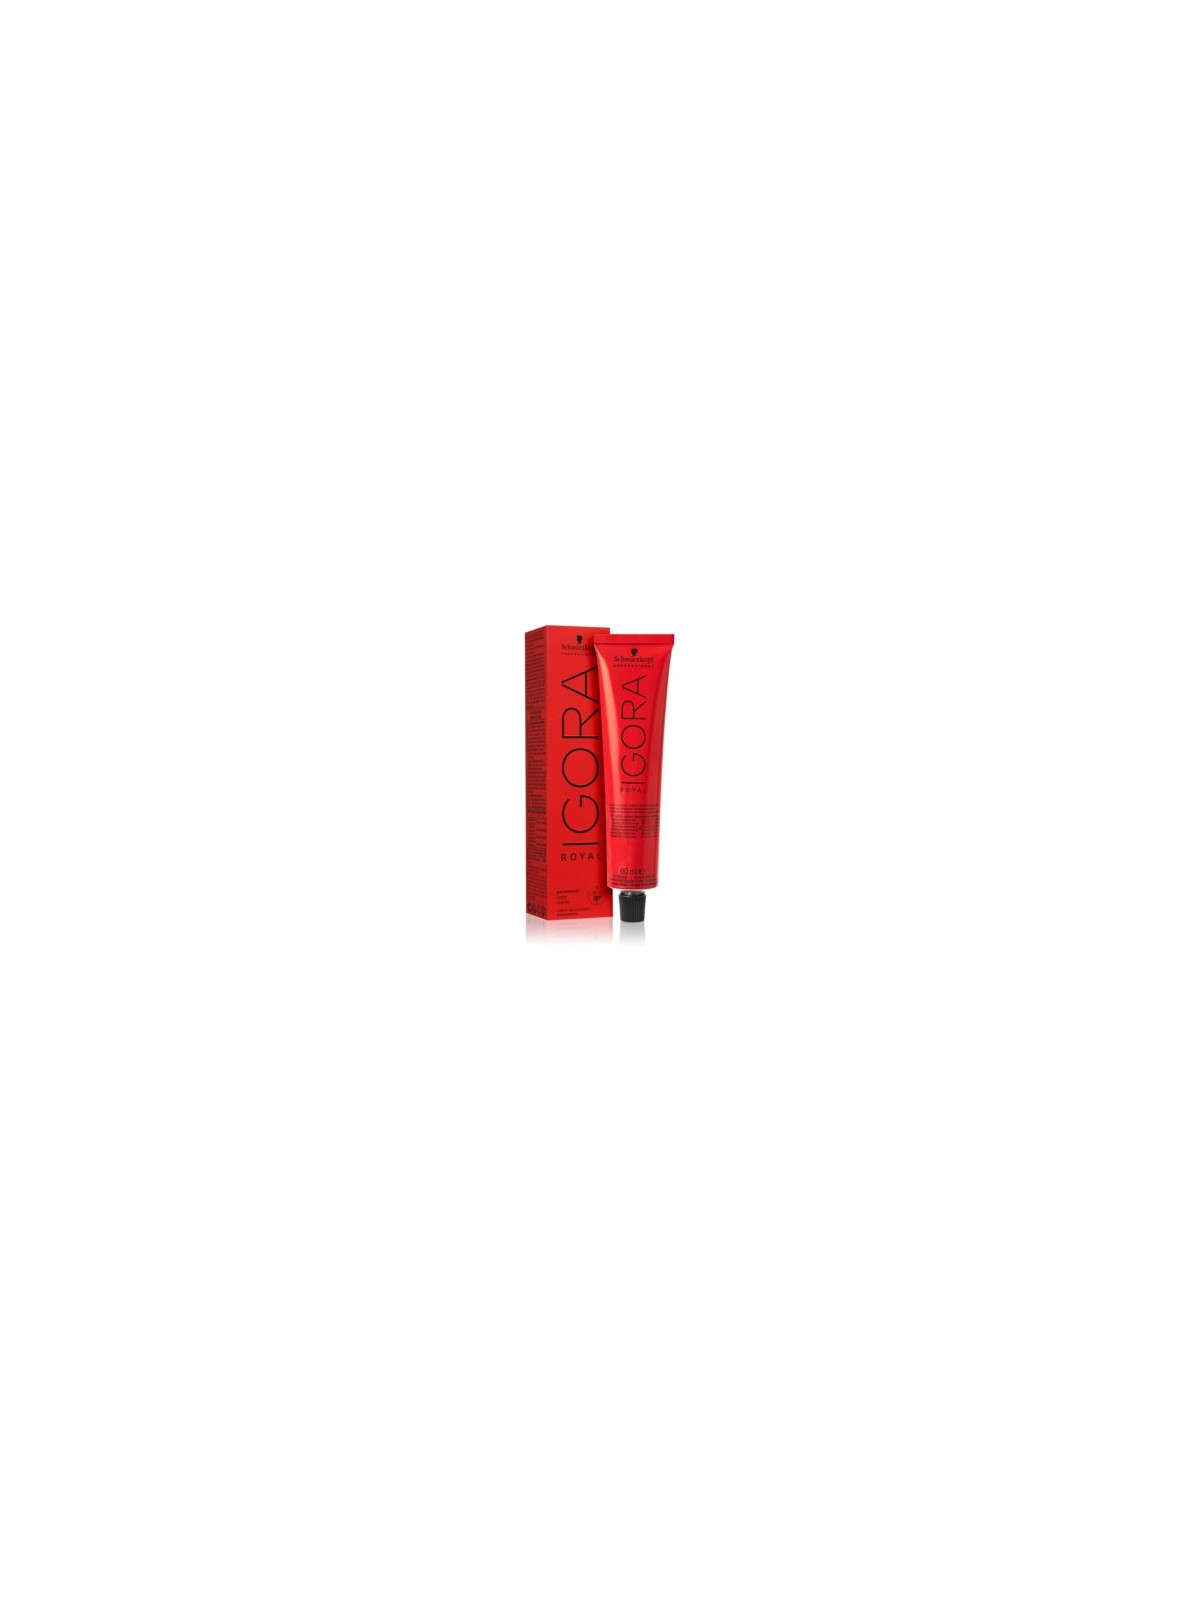 Comprar Schwarzkopf Tinte Permanente IGORA ROYAL 60ml. Nº 6-88 Rubio oscuro rojo intenso en Tintes con amoniaco por sólo 13,82 € o un precio específico de 8,29 € en Thalie Care